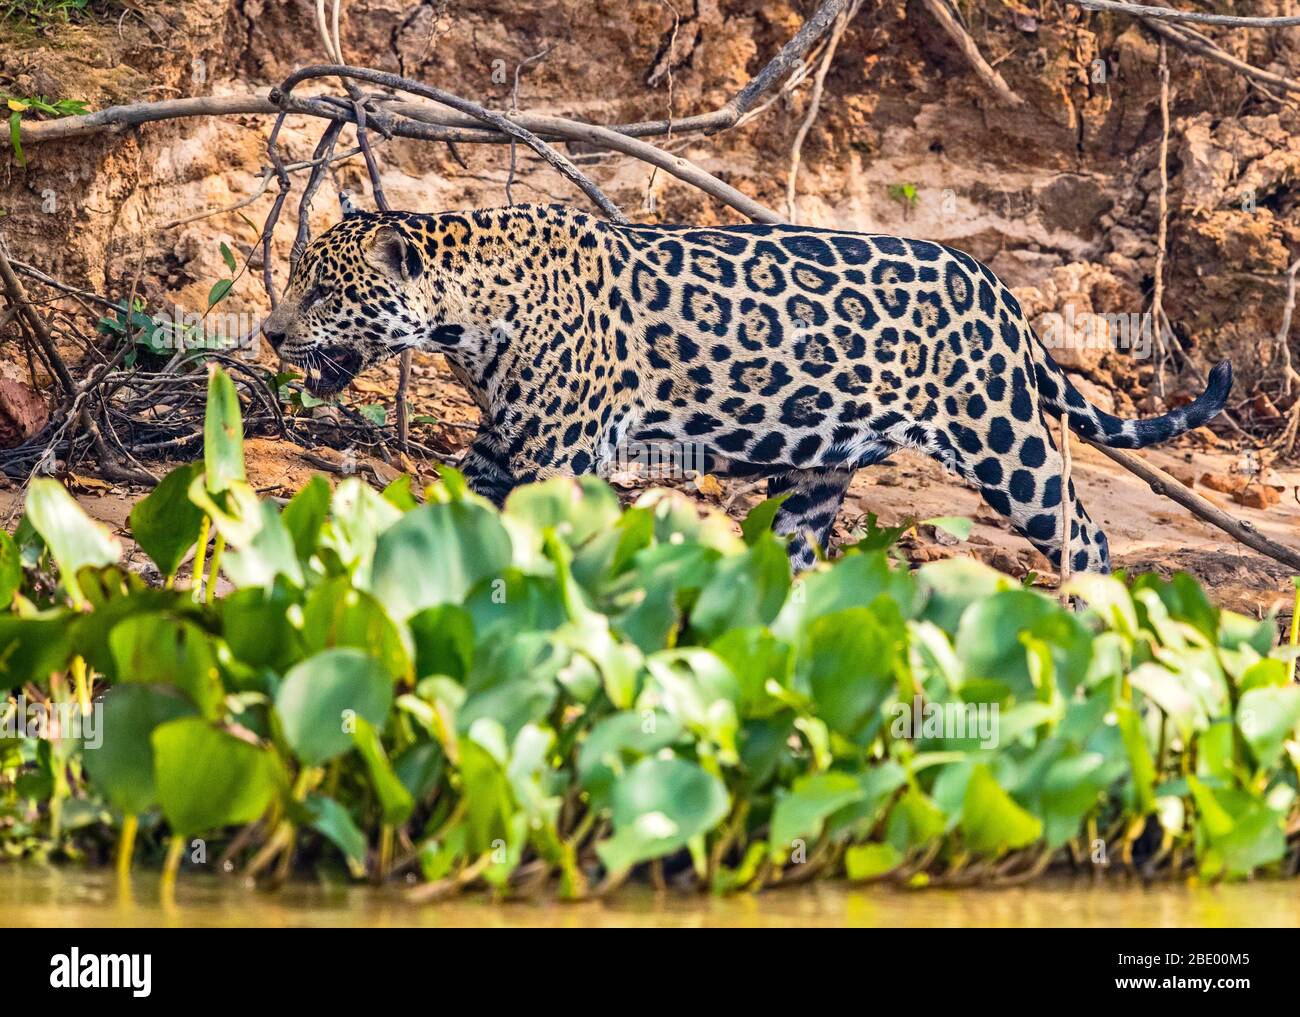 Jaguar walking, Pantanal, Brazil Stock Photo